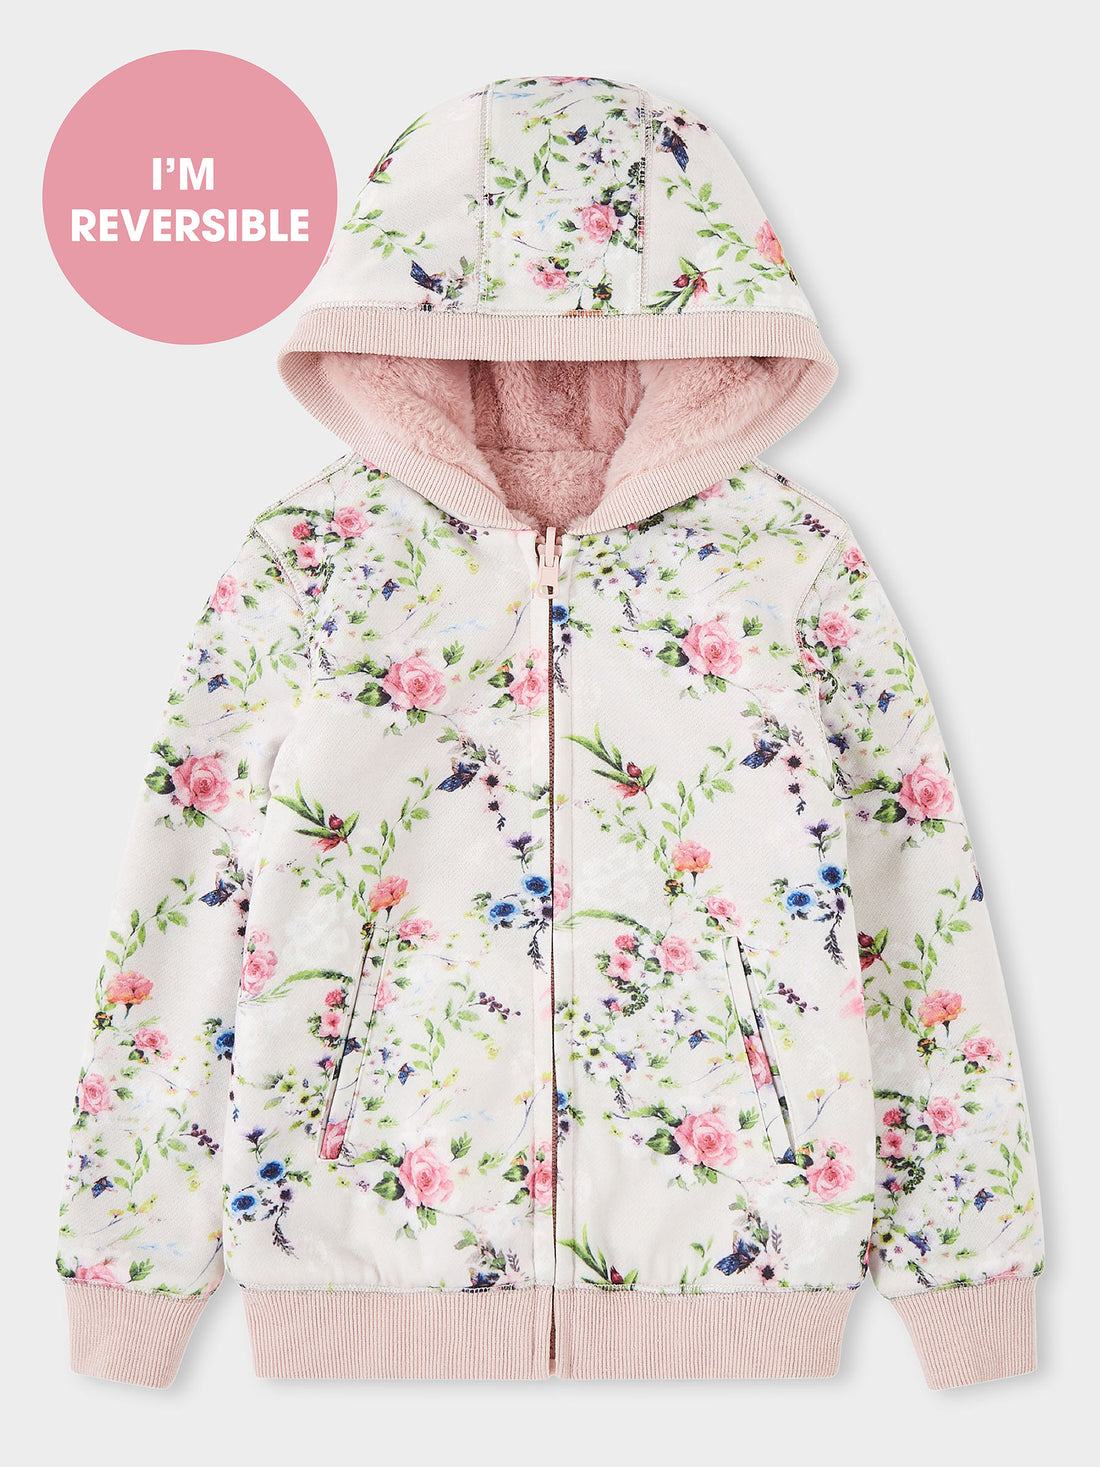 Ava Fay Reversible Jacket | GWD Fashion